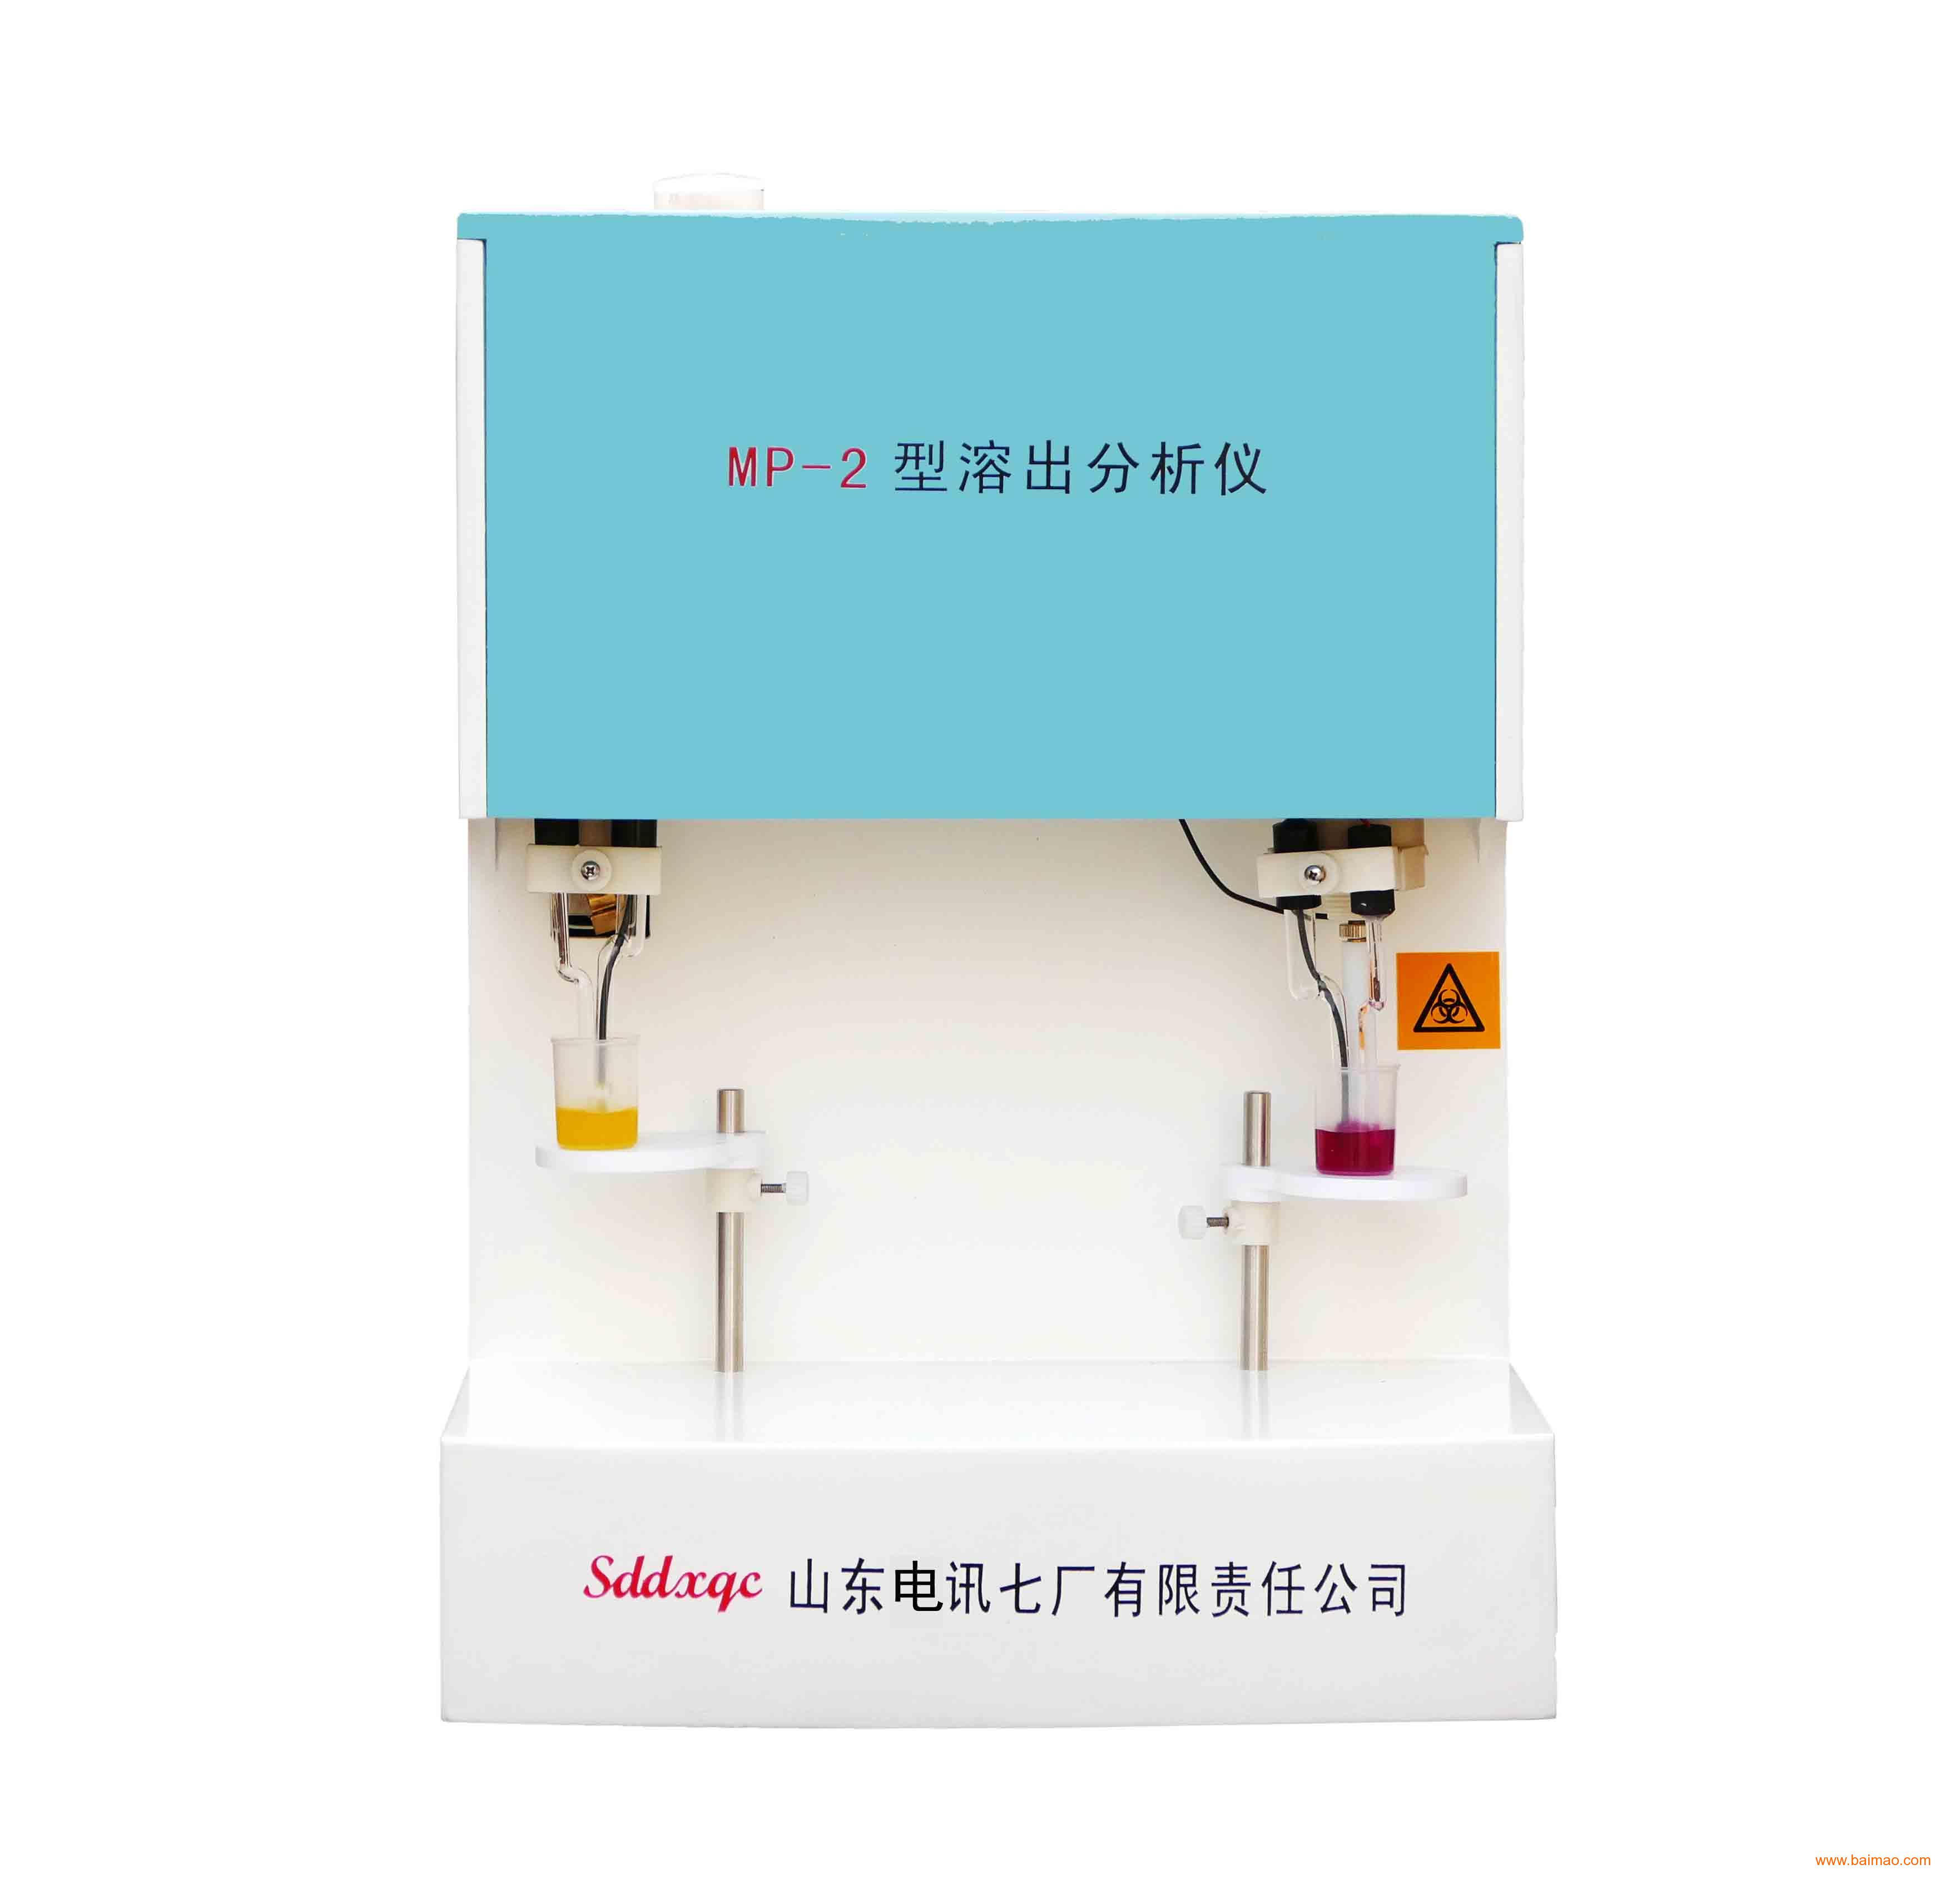 MP-2型溶出分析仪血铅**用型重金属检测仪